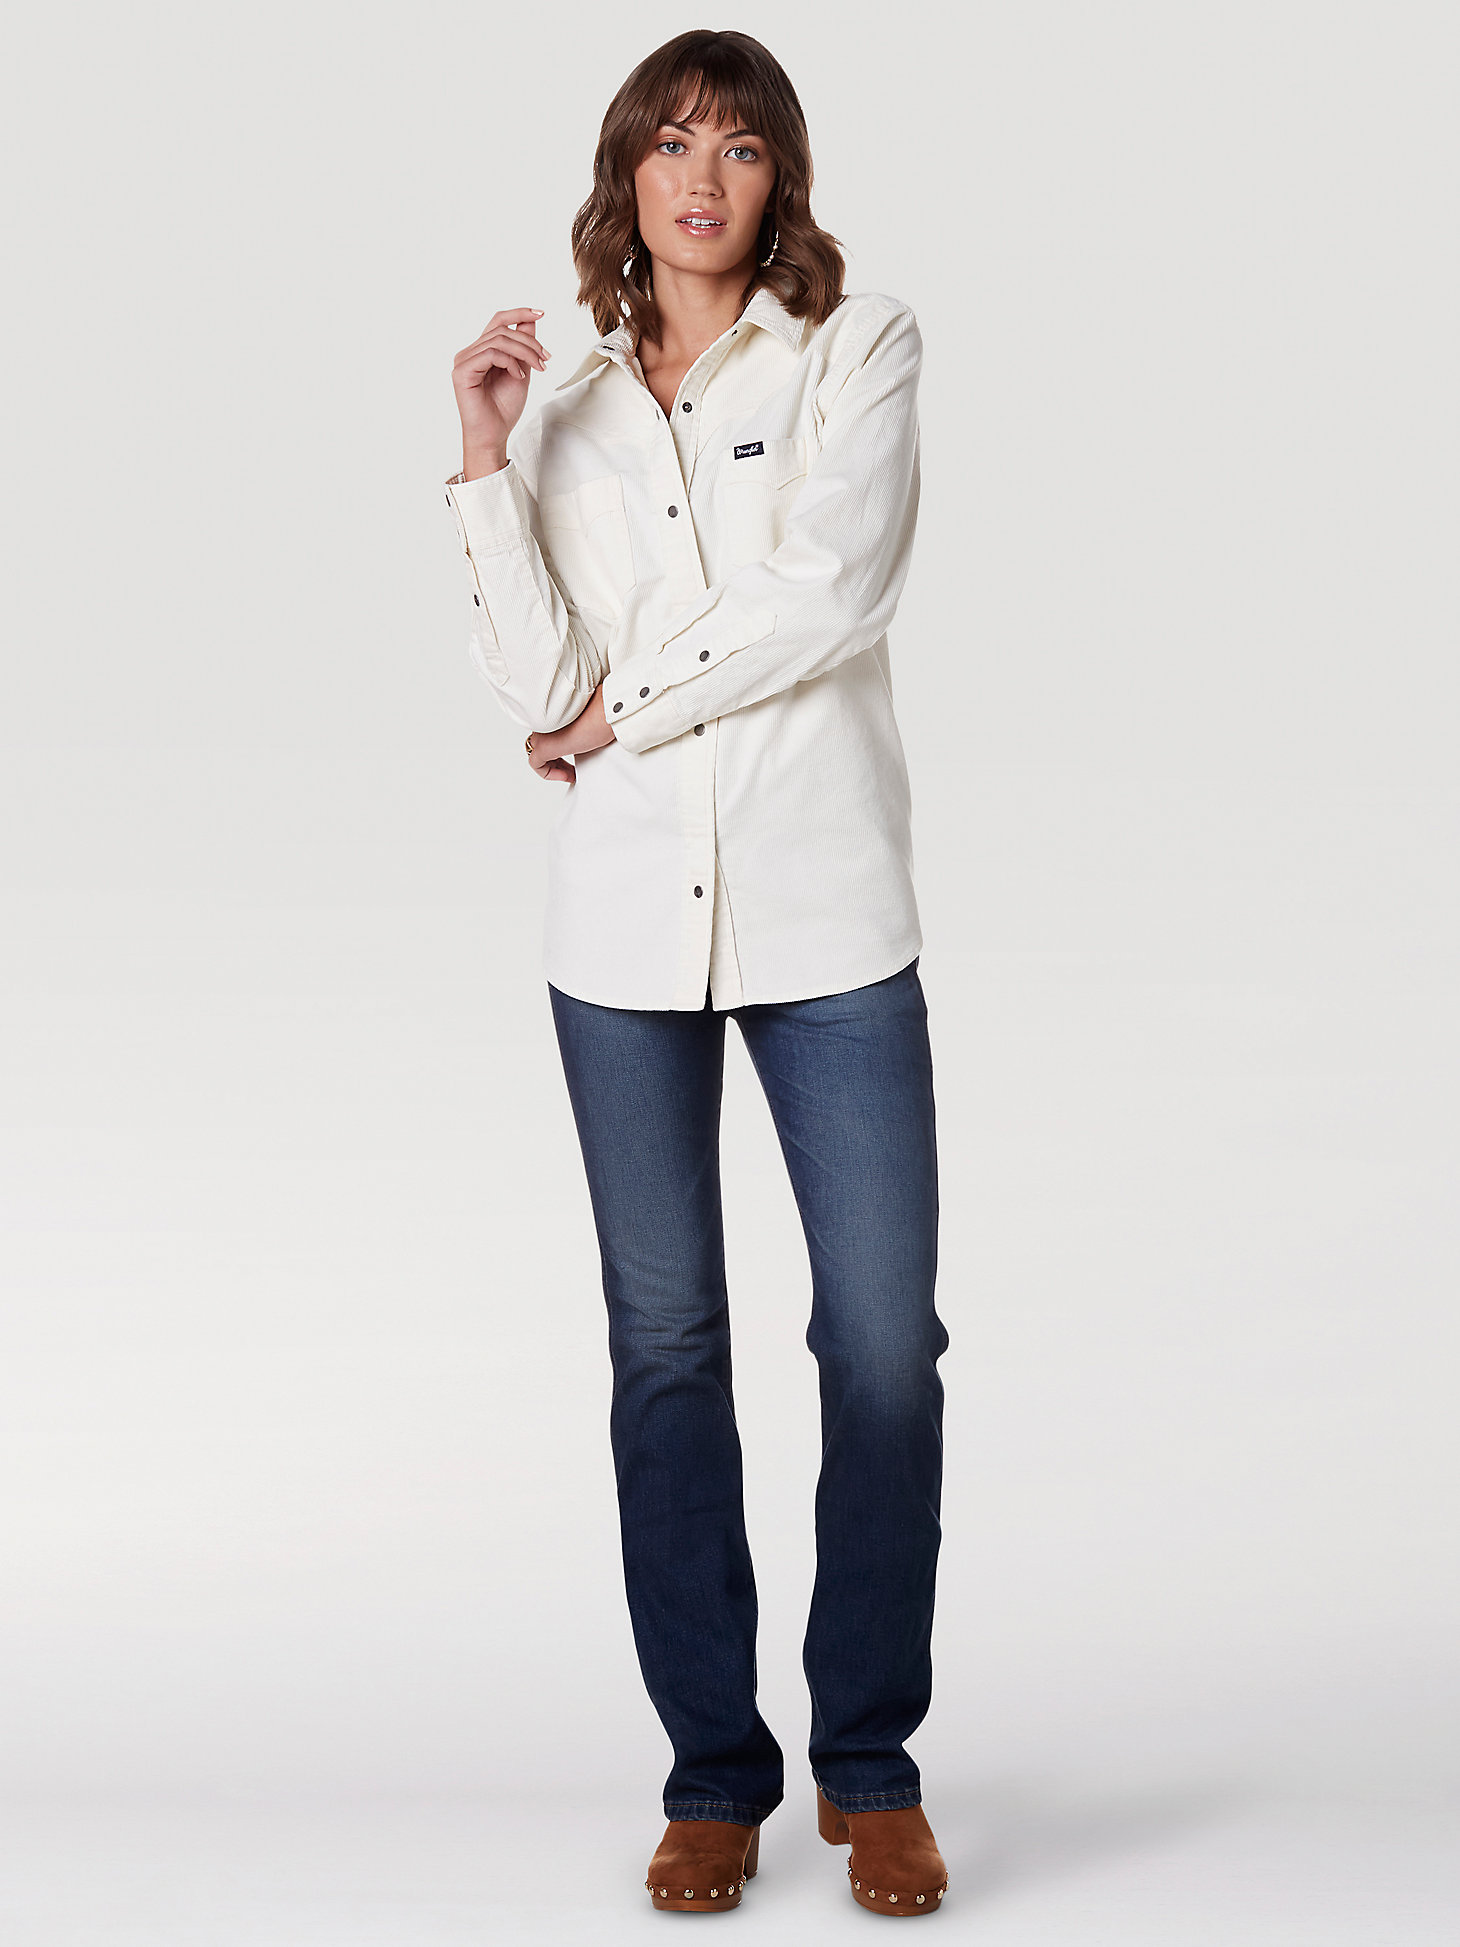 Women's Wrangler Long Sleeve Corduroy Western Snap Shirt in White alternative view 1